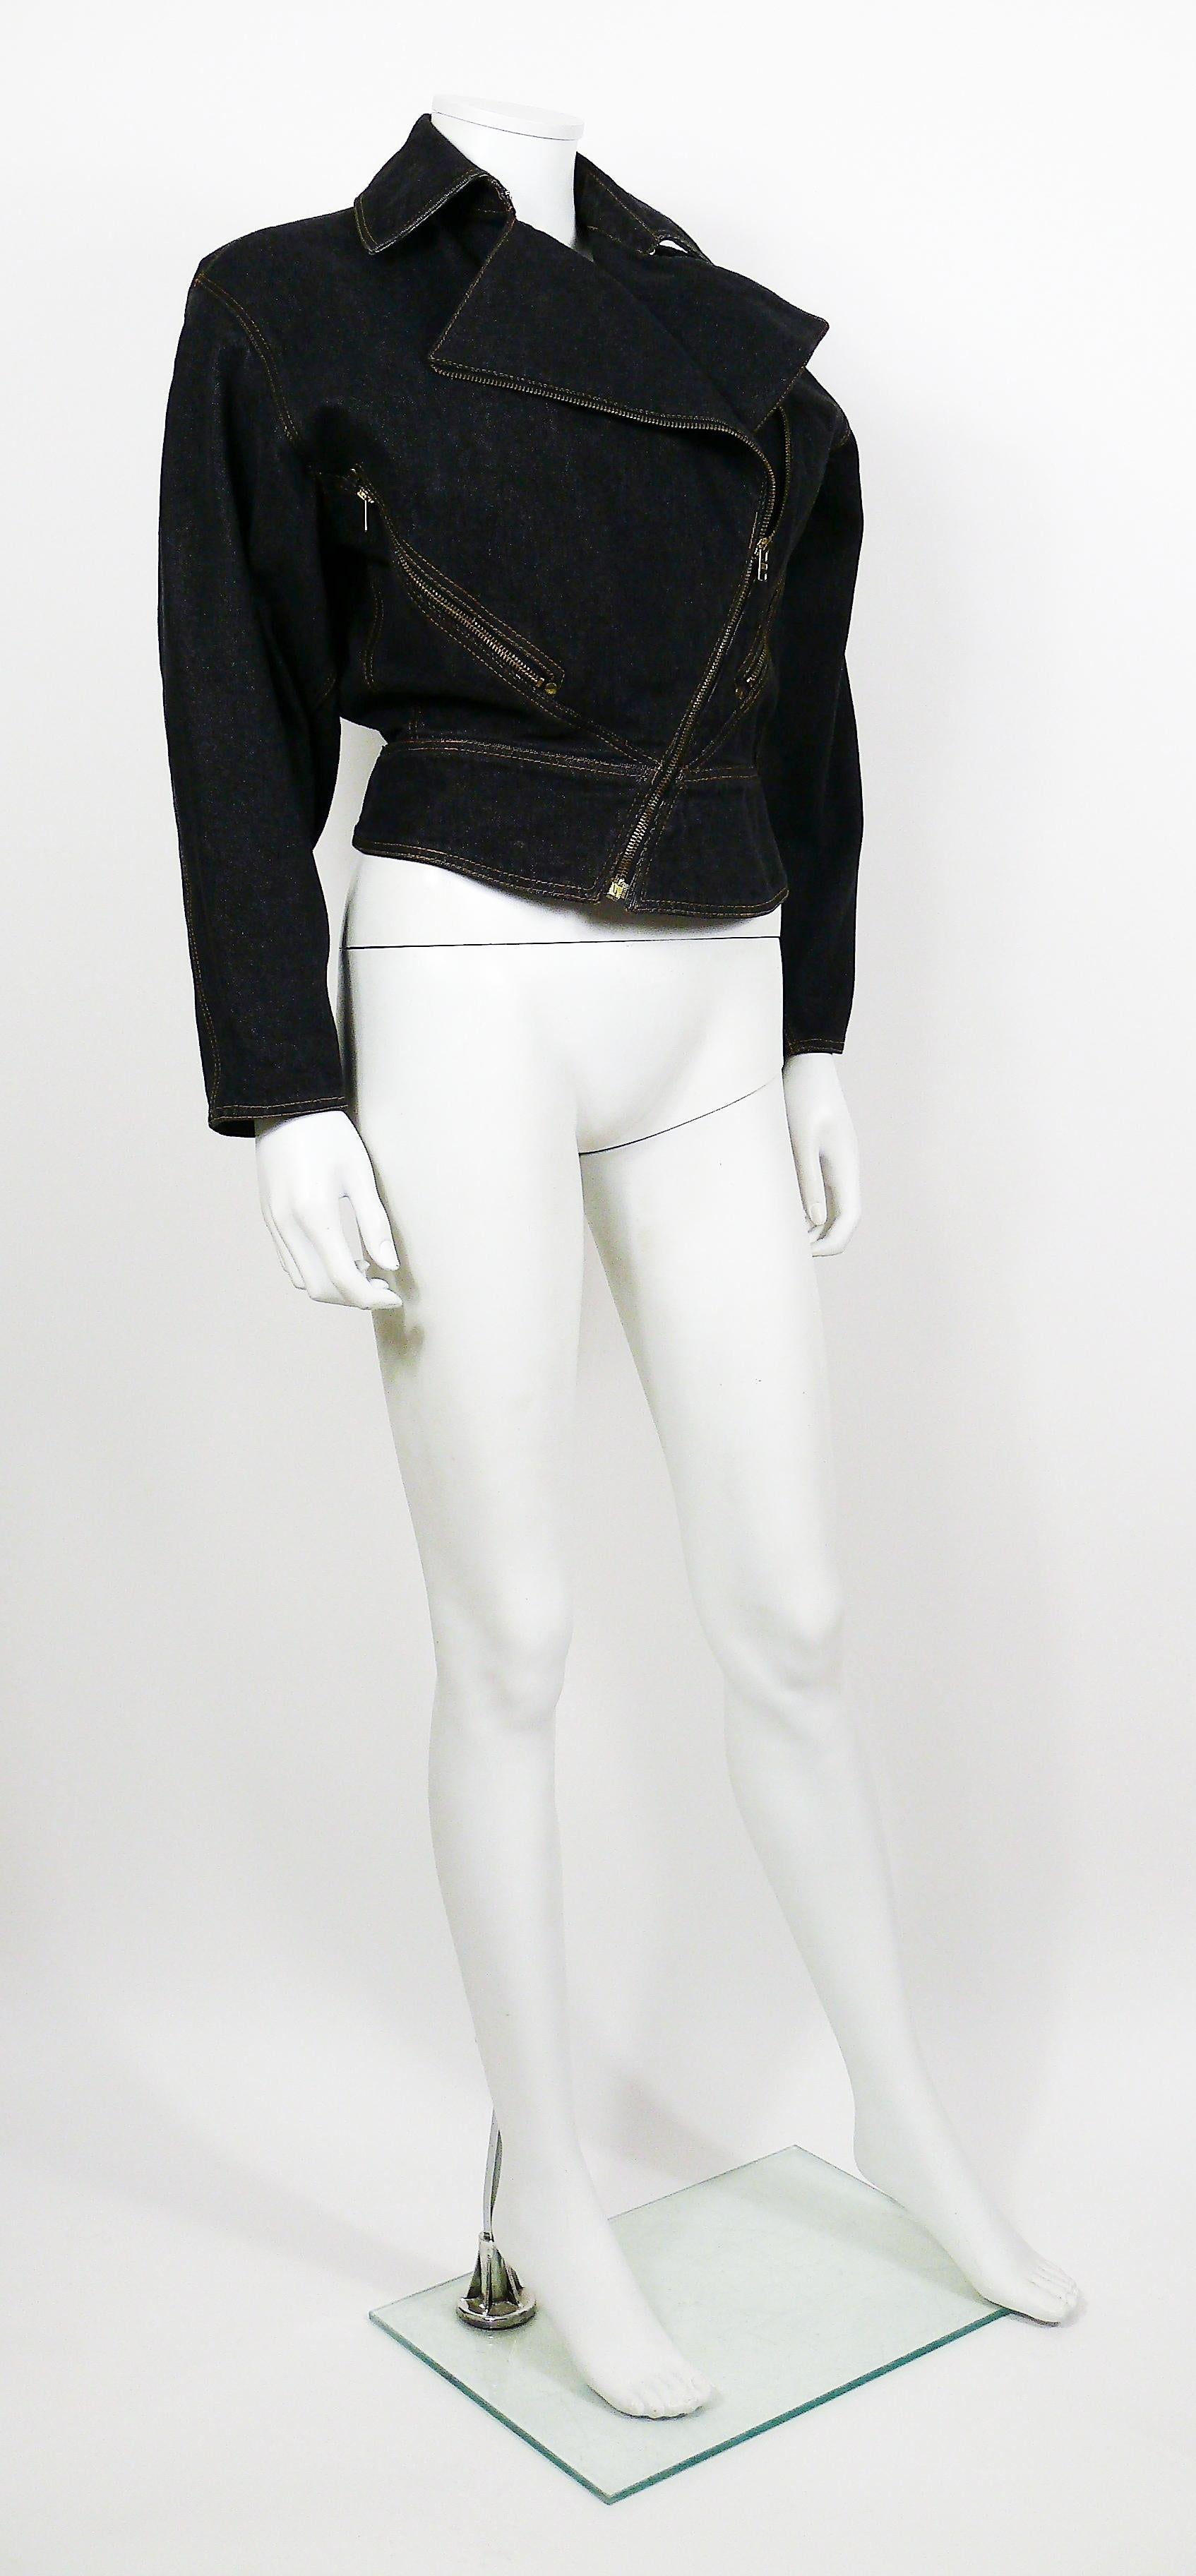 AZZEDINE ALAIA vintage black denim jacket with brass zip closures.   

Label reads ALAIA Paris.
Made in France.

Size tag reads FR 38 / D 36 / US 6 / GB 10.

Composition label reads : 100 % Cotton. 

Indicative measurements taken laid flat (double